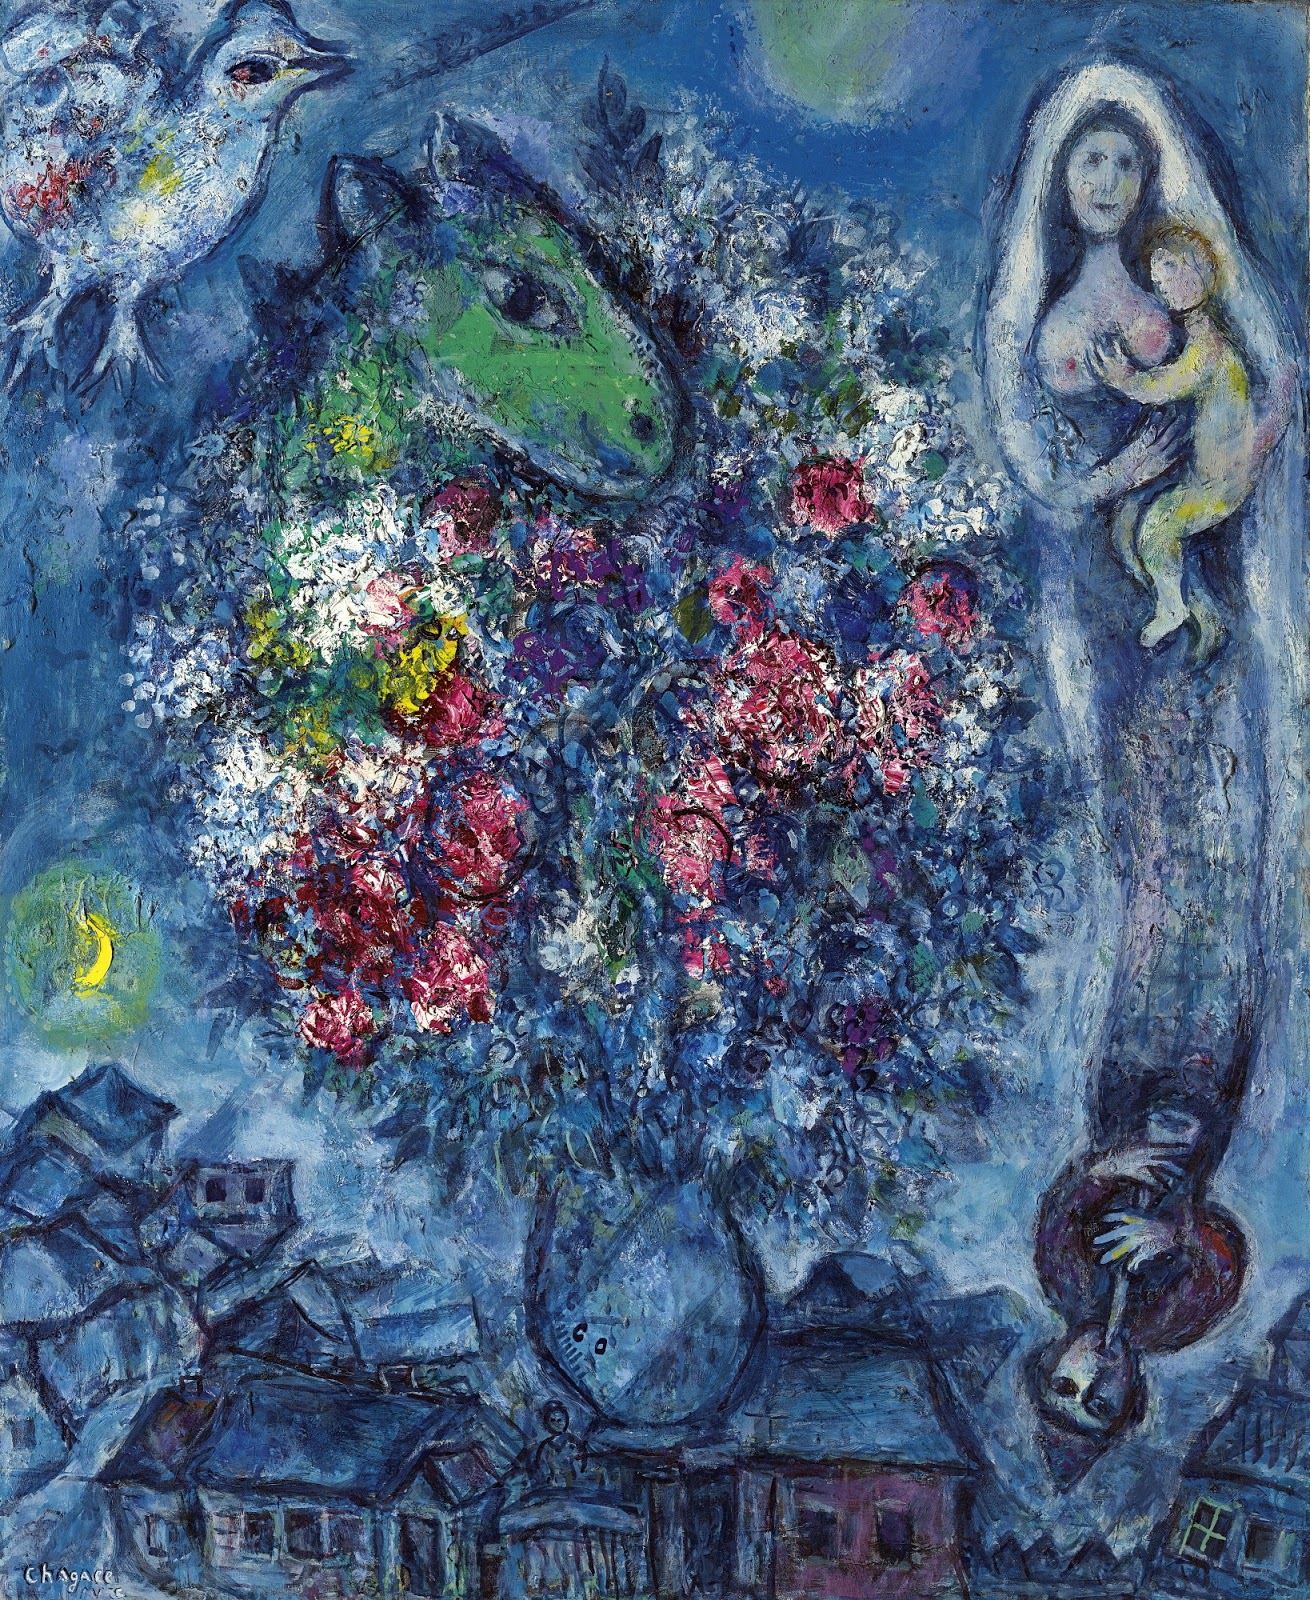 Marc+Chagall-1887-1985 (222).jpg